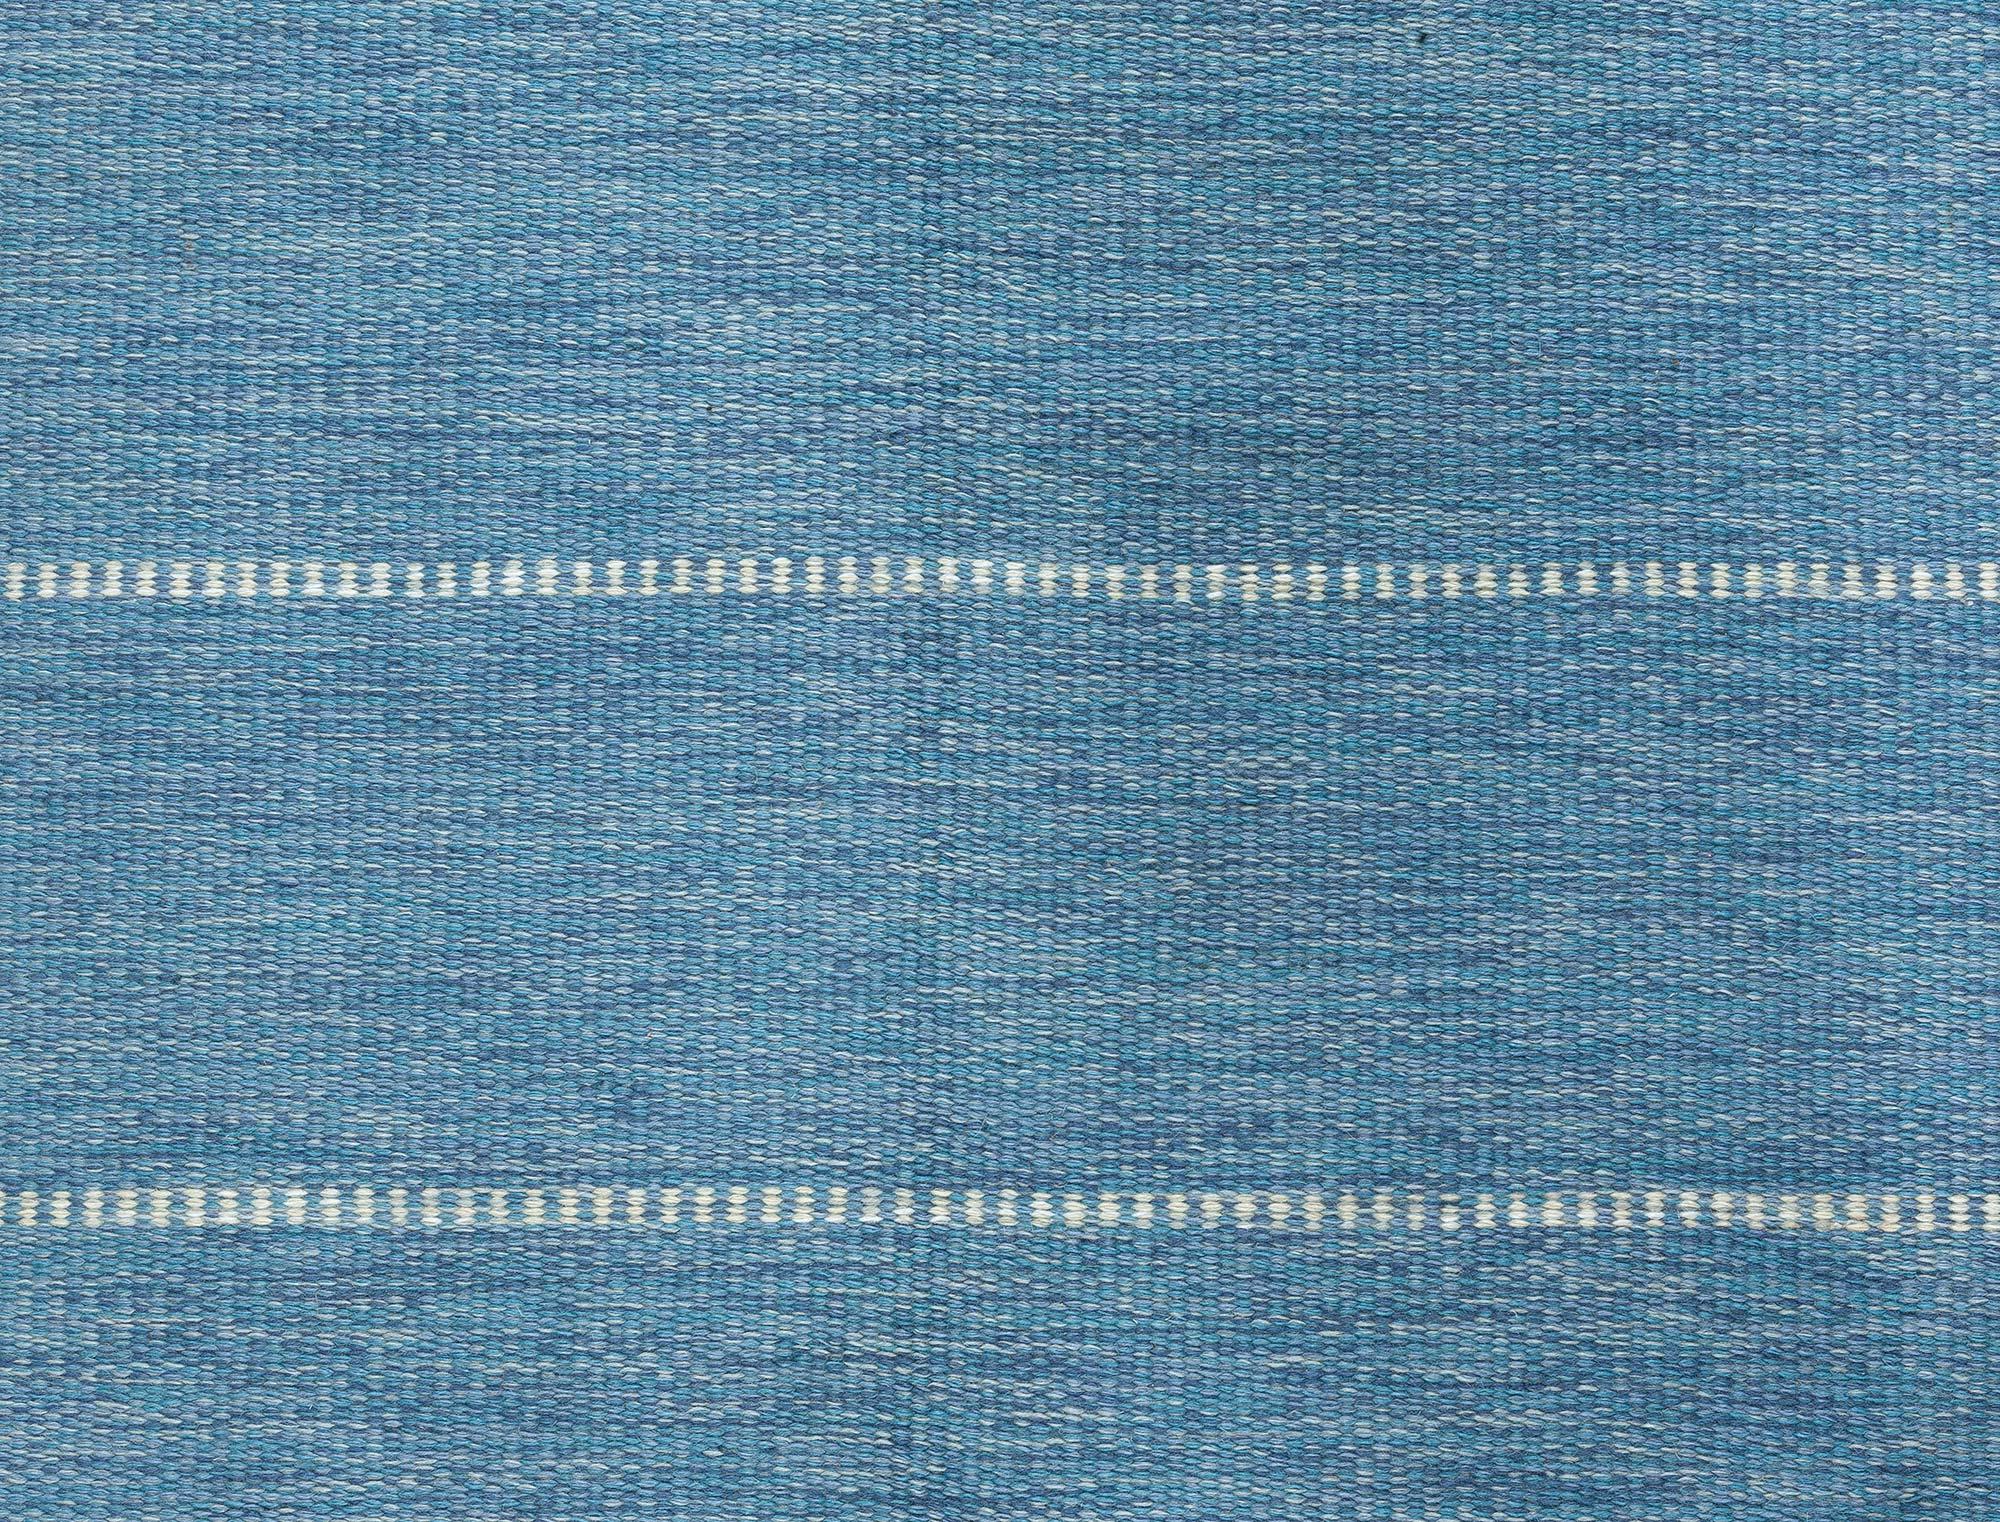 Vintage Swedish Blue Flat Woven rug by Ingegerd Silow
Size: 5'6